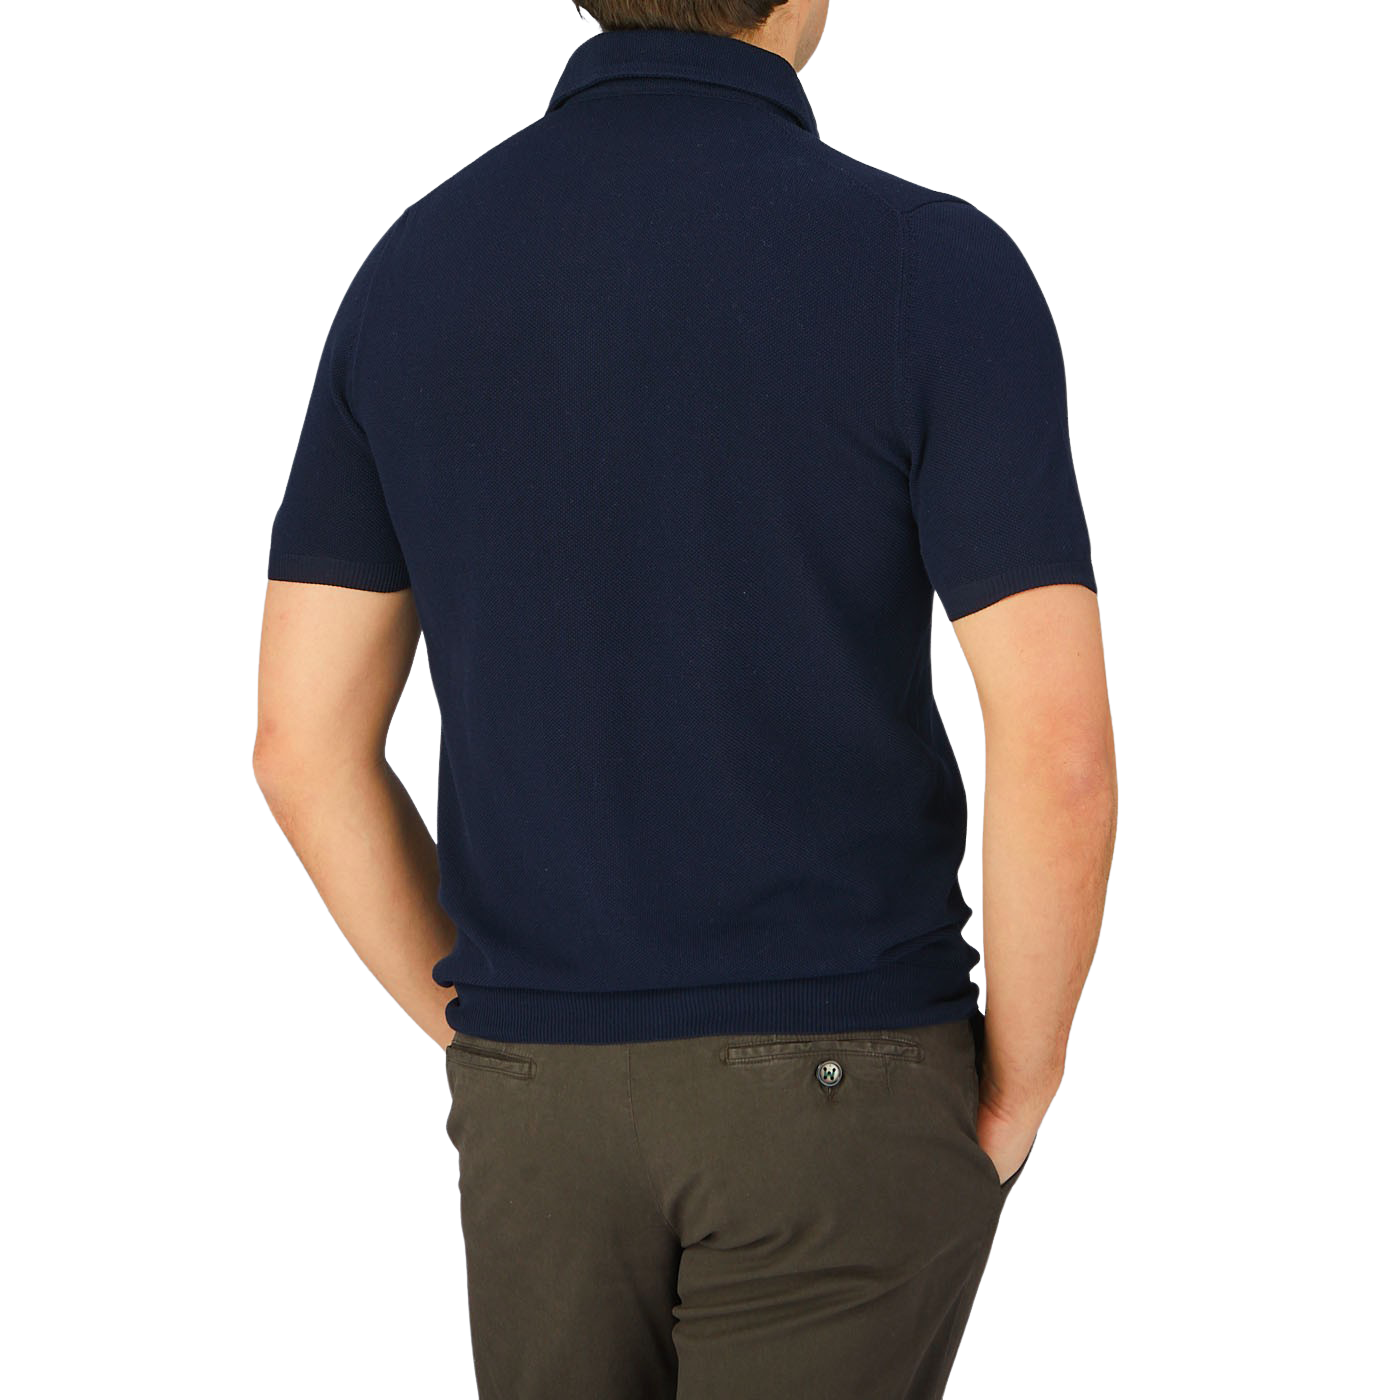 The back view of a man wearing a Gran Sasso Navy Fresh Cotton Mesh Polo Shirt.